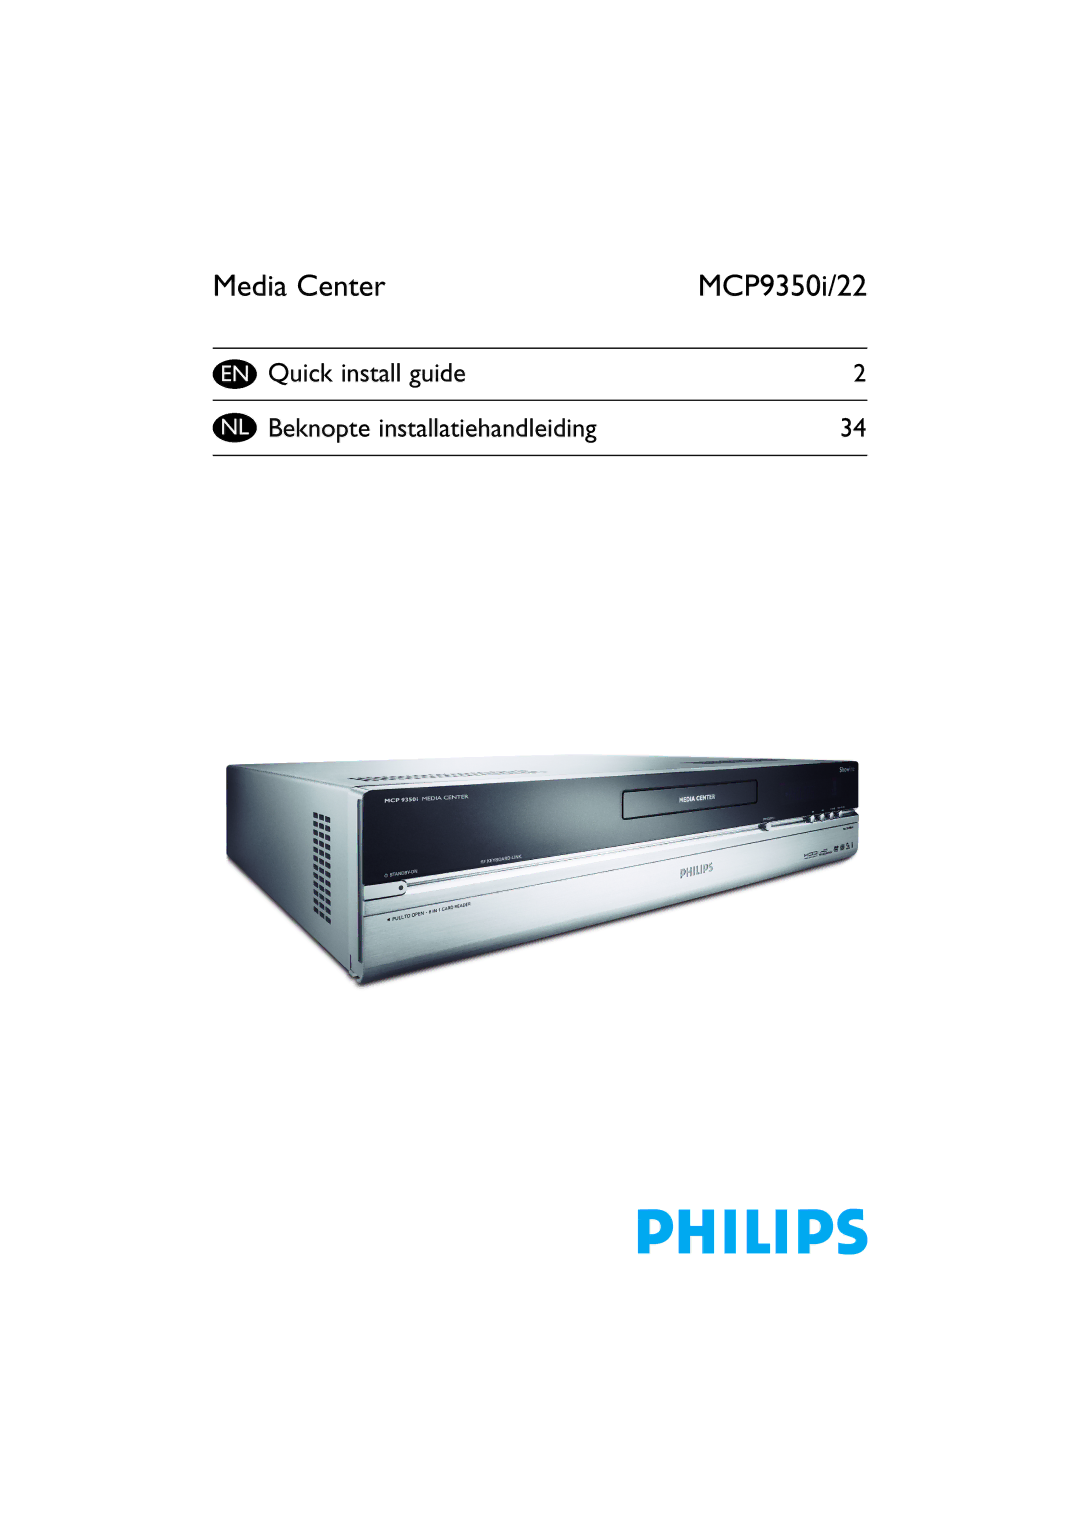 Philips MCP9350I/22 manual Media Center, MCP9350i/22 